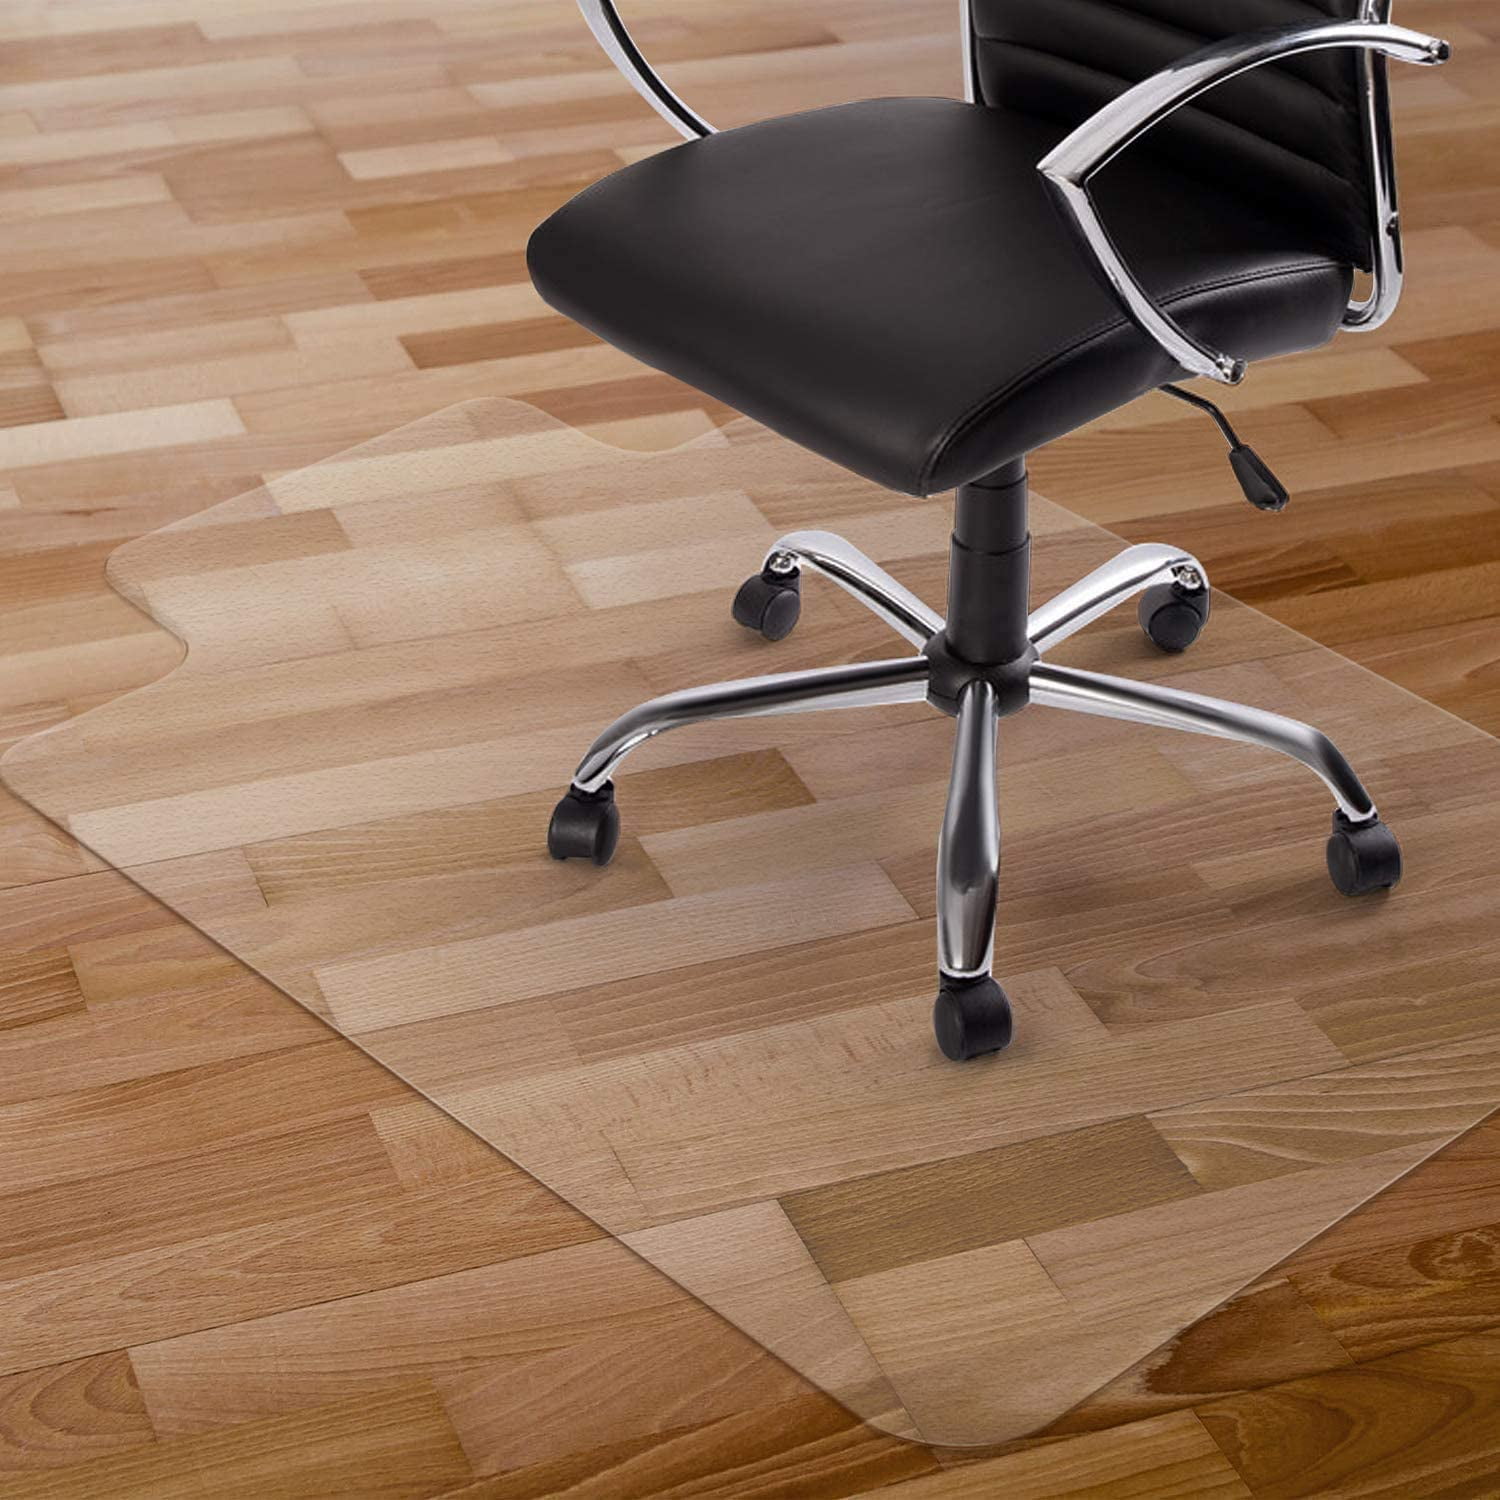 47''×47'',Heavy Duty Clear Wood/Tile Floor Protector PVC Transparent HYNAWIN Office Chair Mat for Hardwood Floors